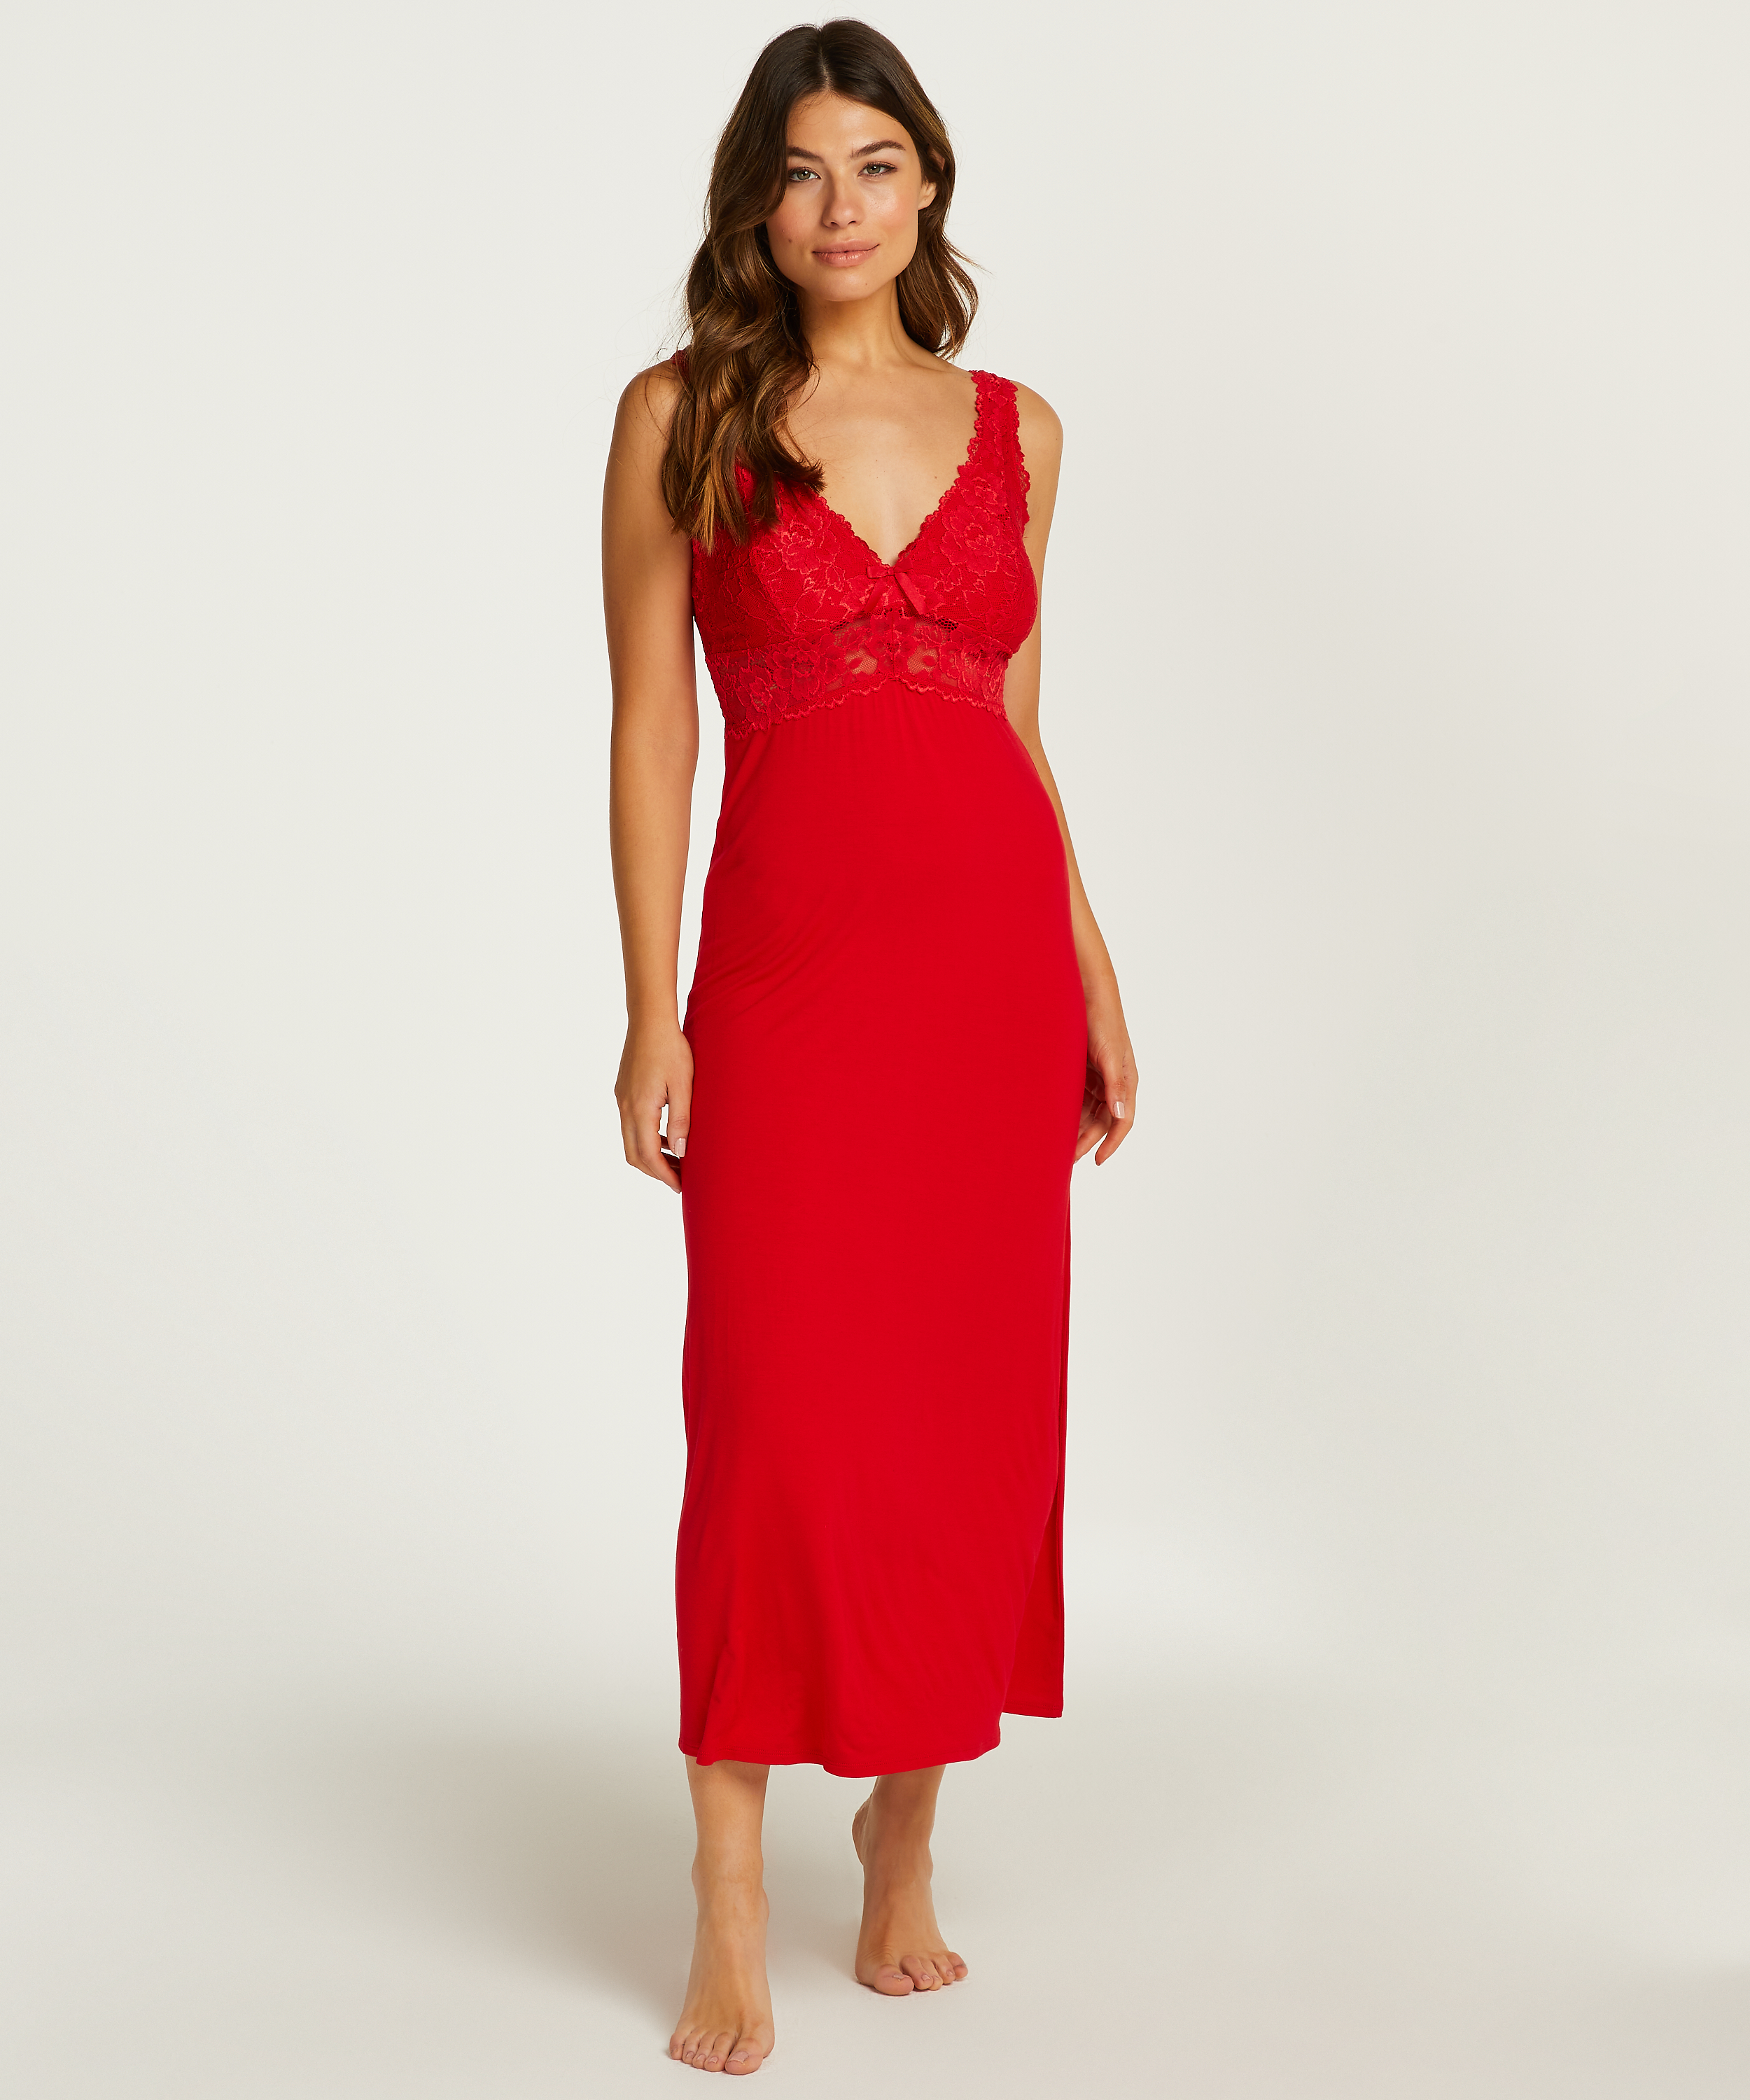 Nora Lace slipklänning, röd, main